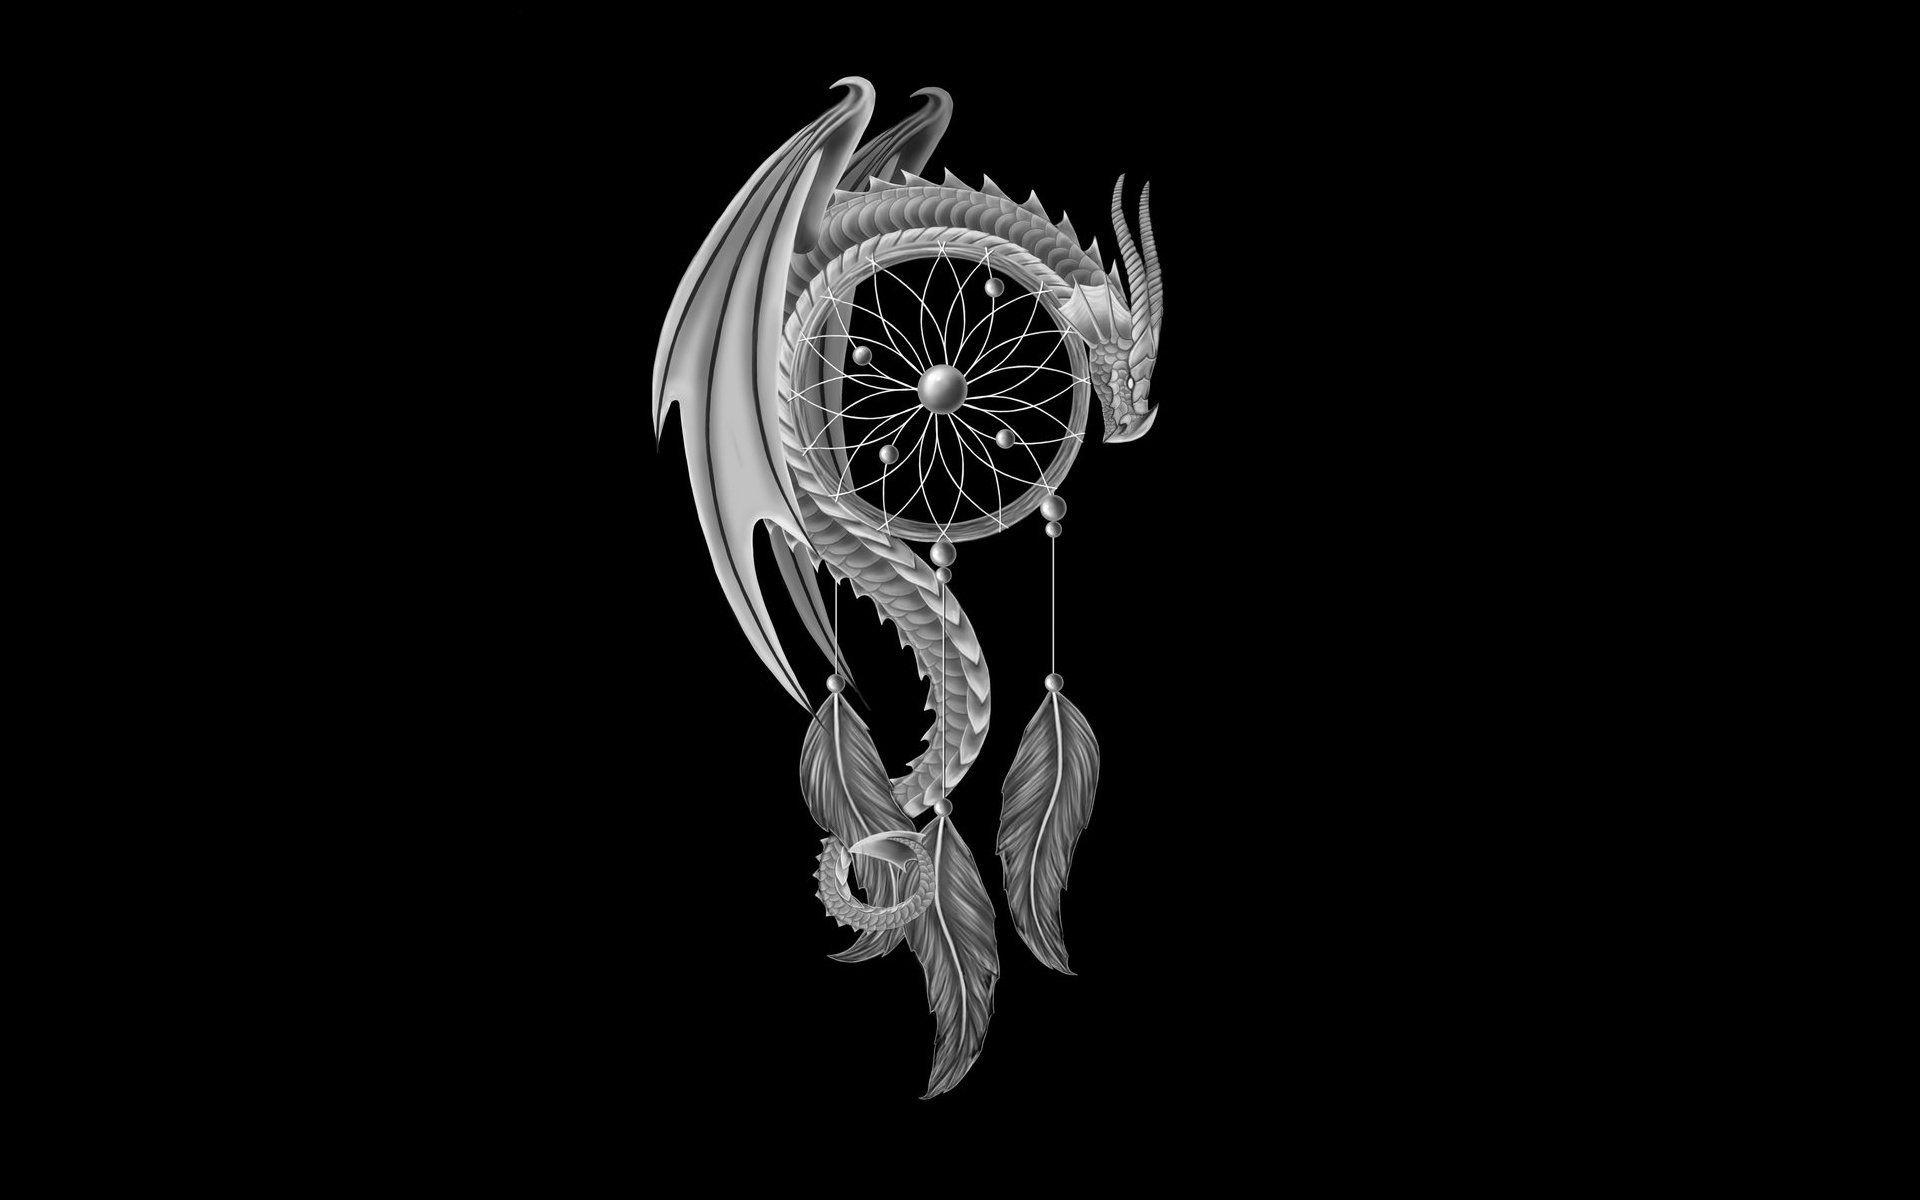 dragon dragon feathers black background dreamcatcher dreamcatcher